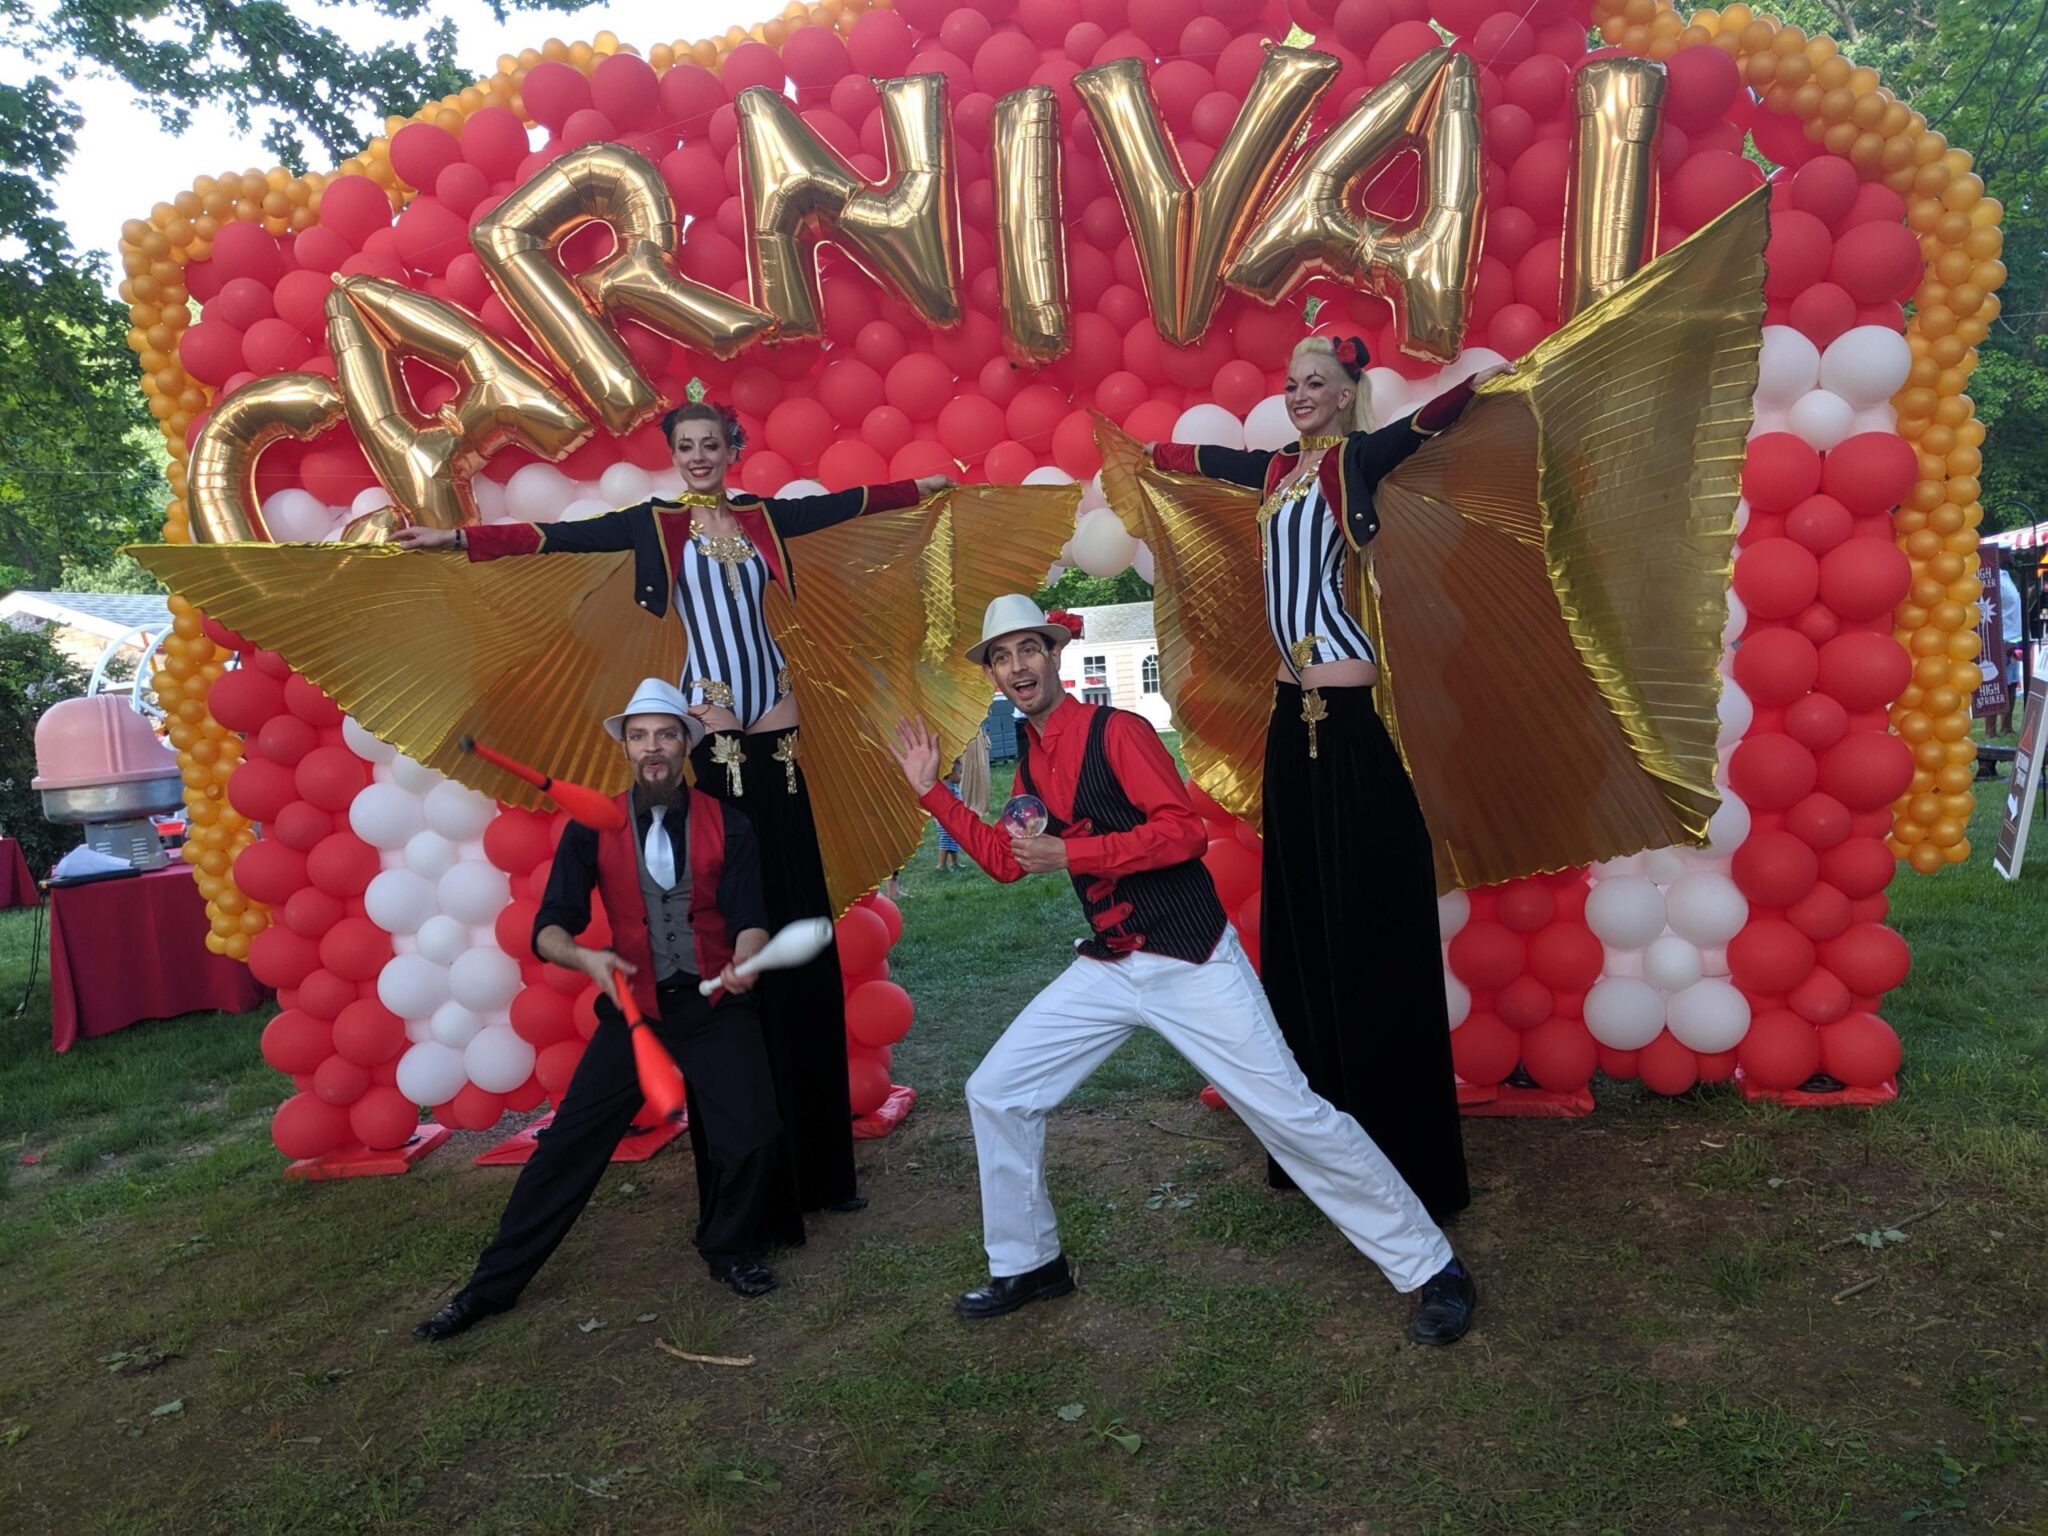 Circus Performers